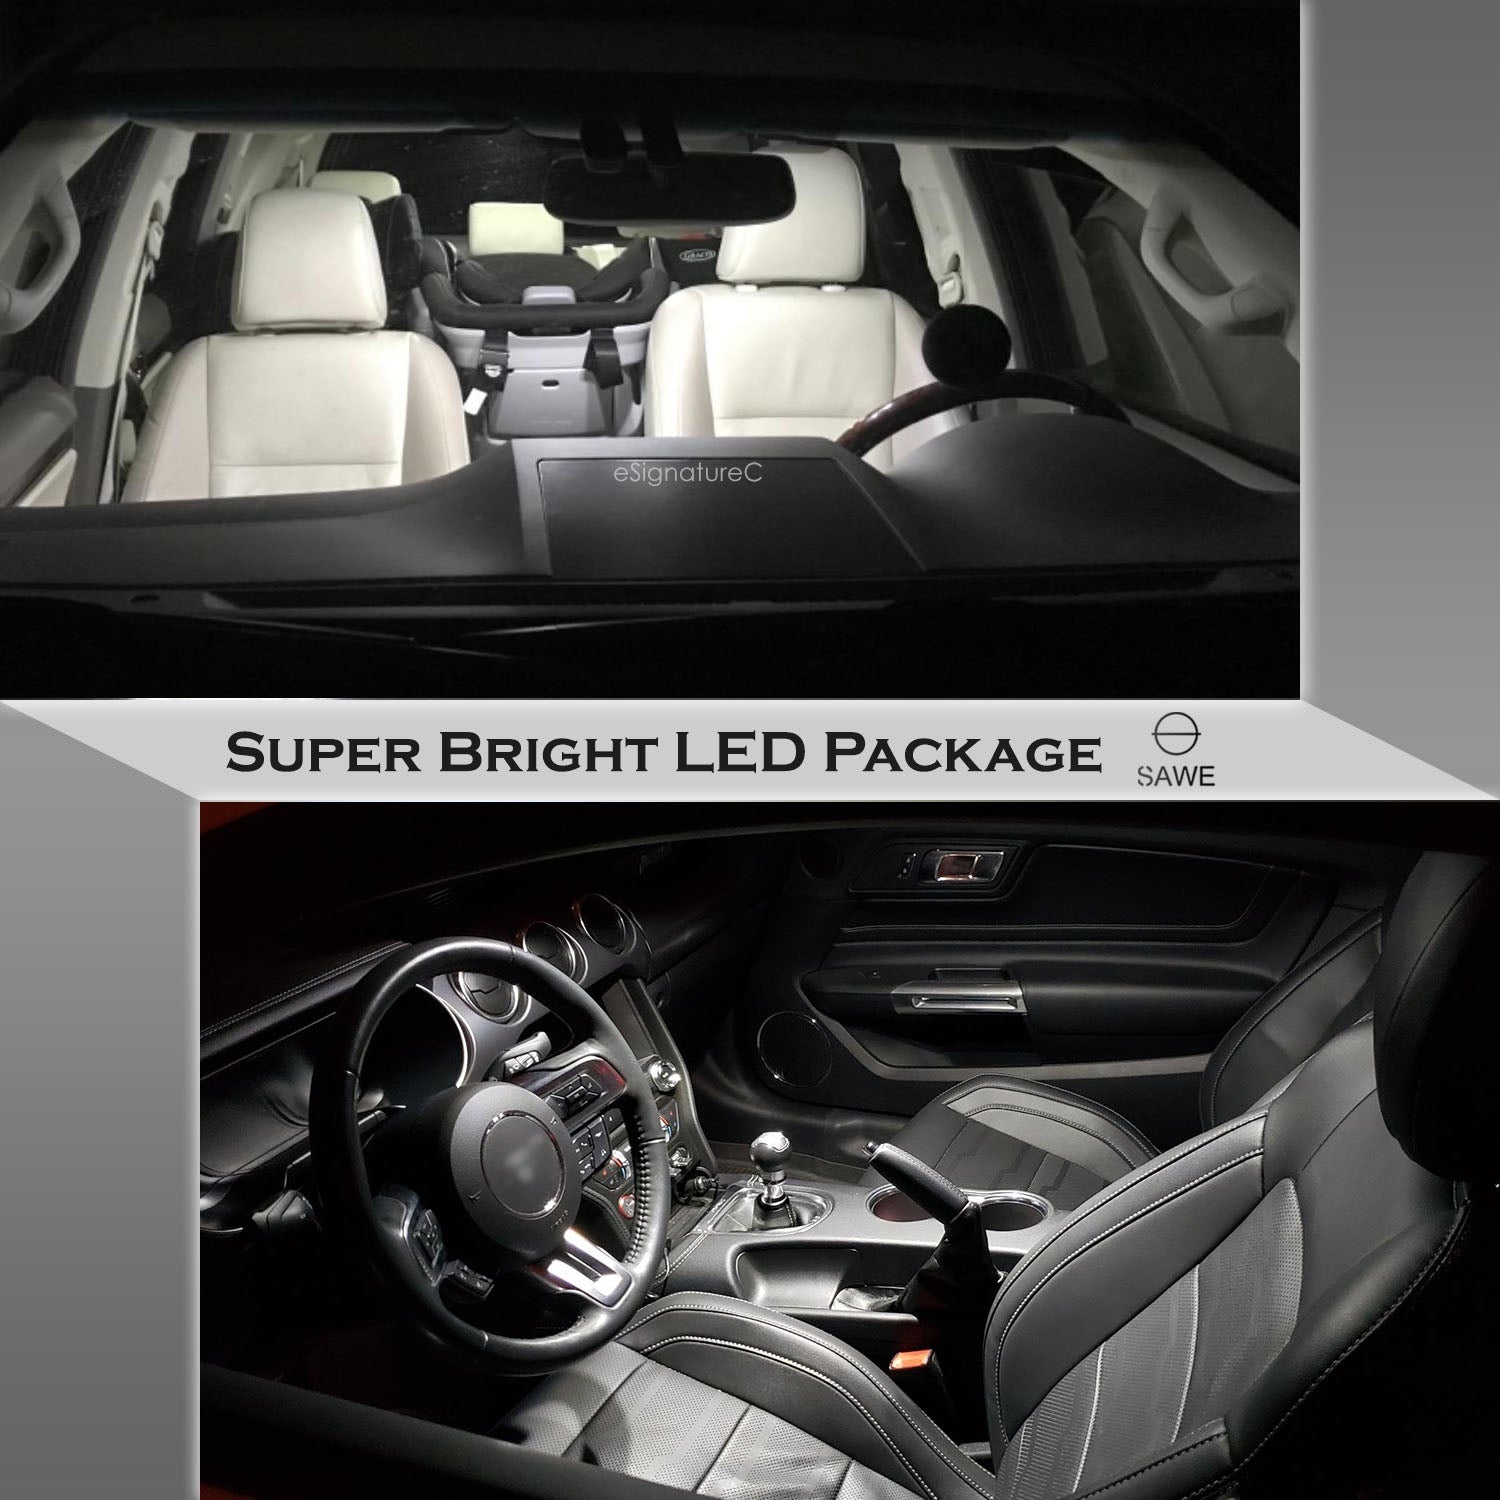 For Mazda 3 Interior LED Lights - Dome & Map Light Bulbs Package Kit for 2004 - 2009 - White